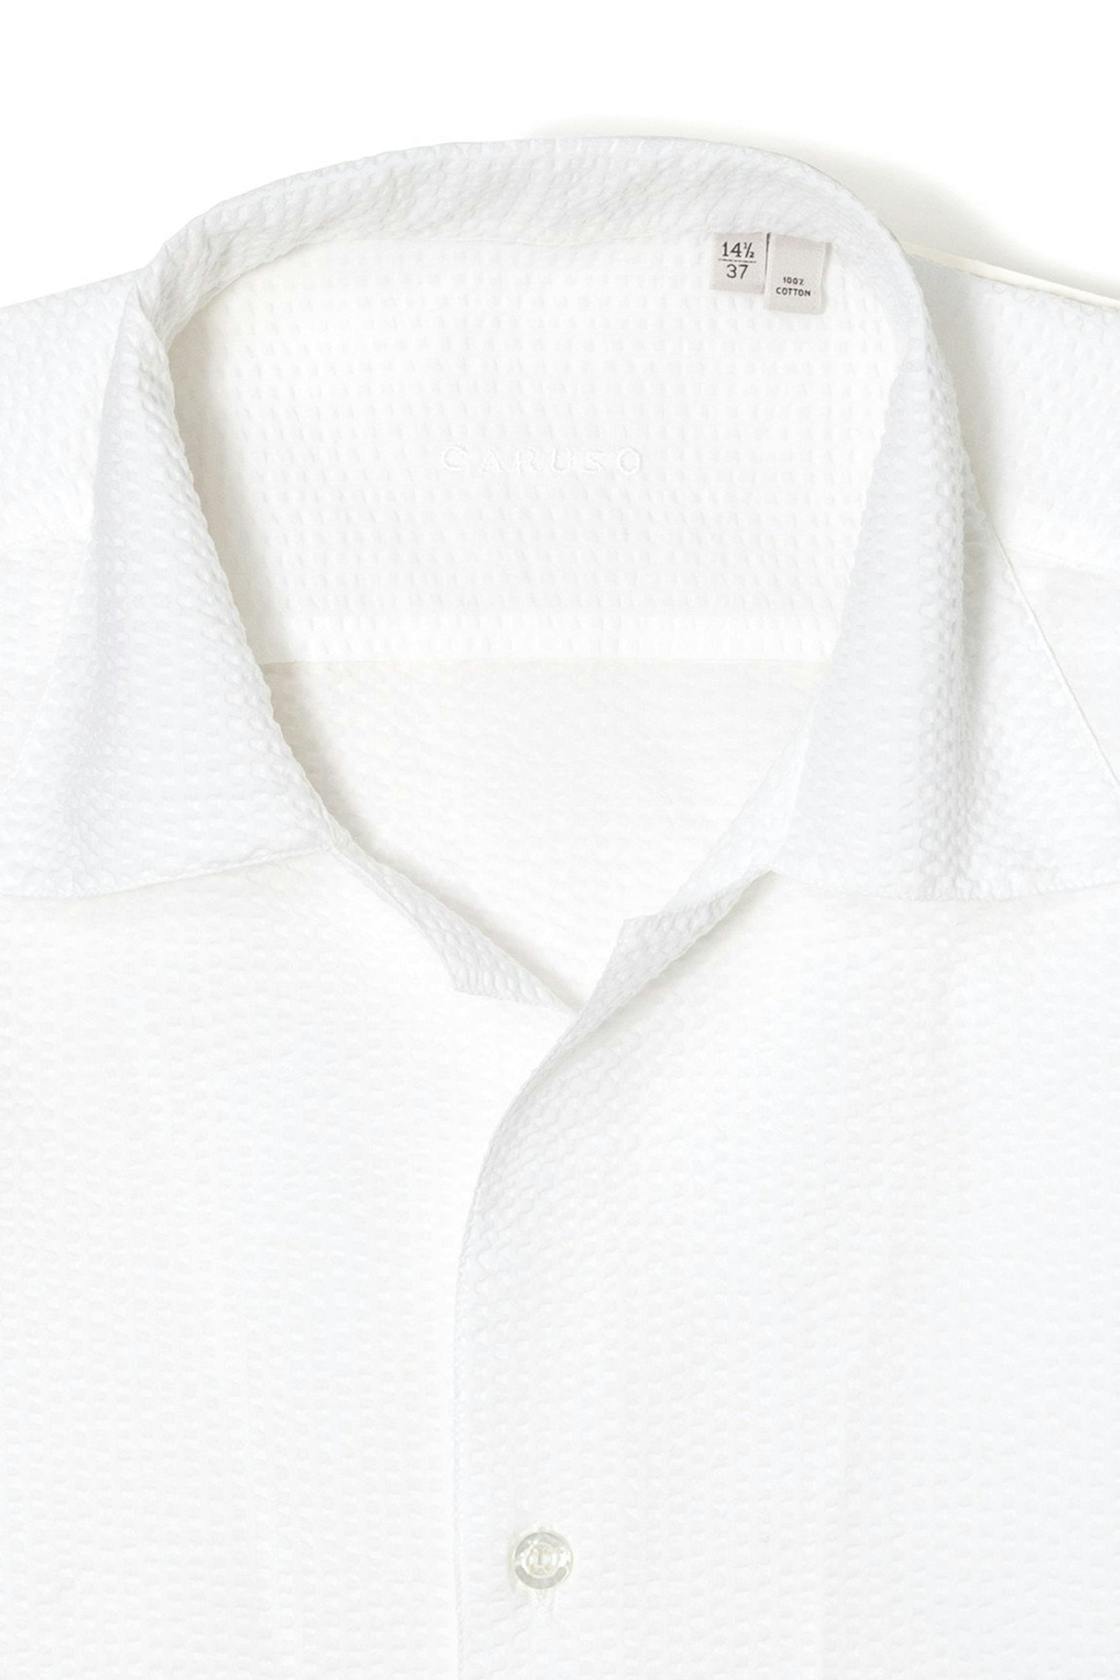 Caruso AFT68 29C184 White Cotton Seersucker Short Sleeve Shirt